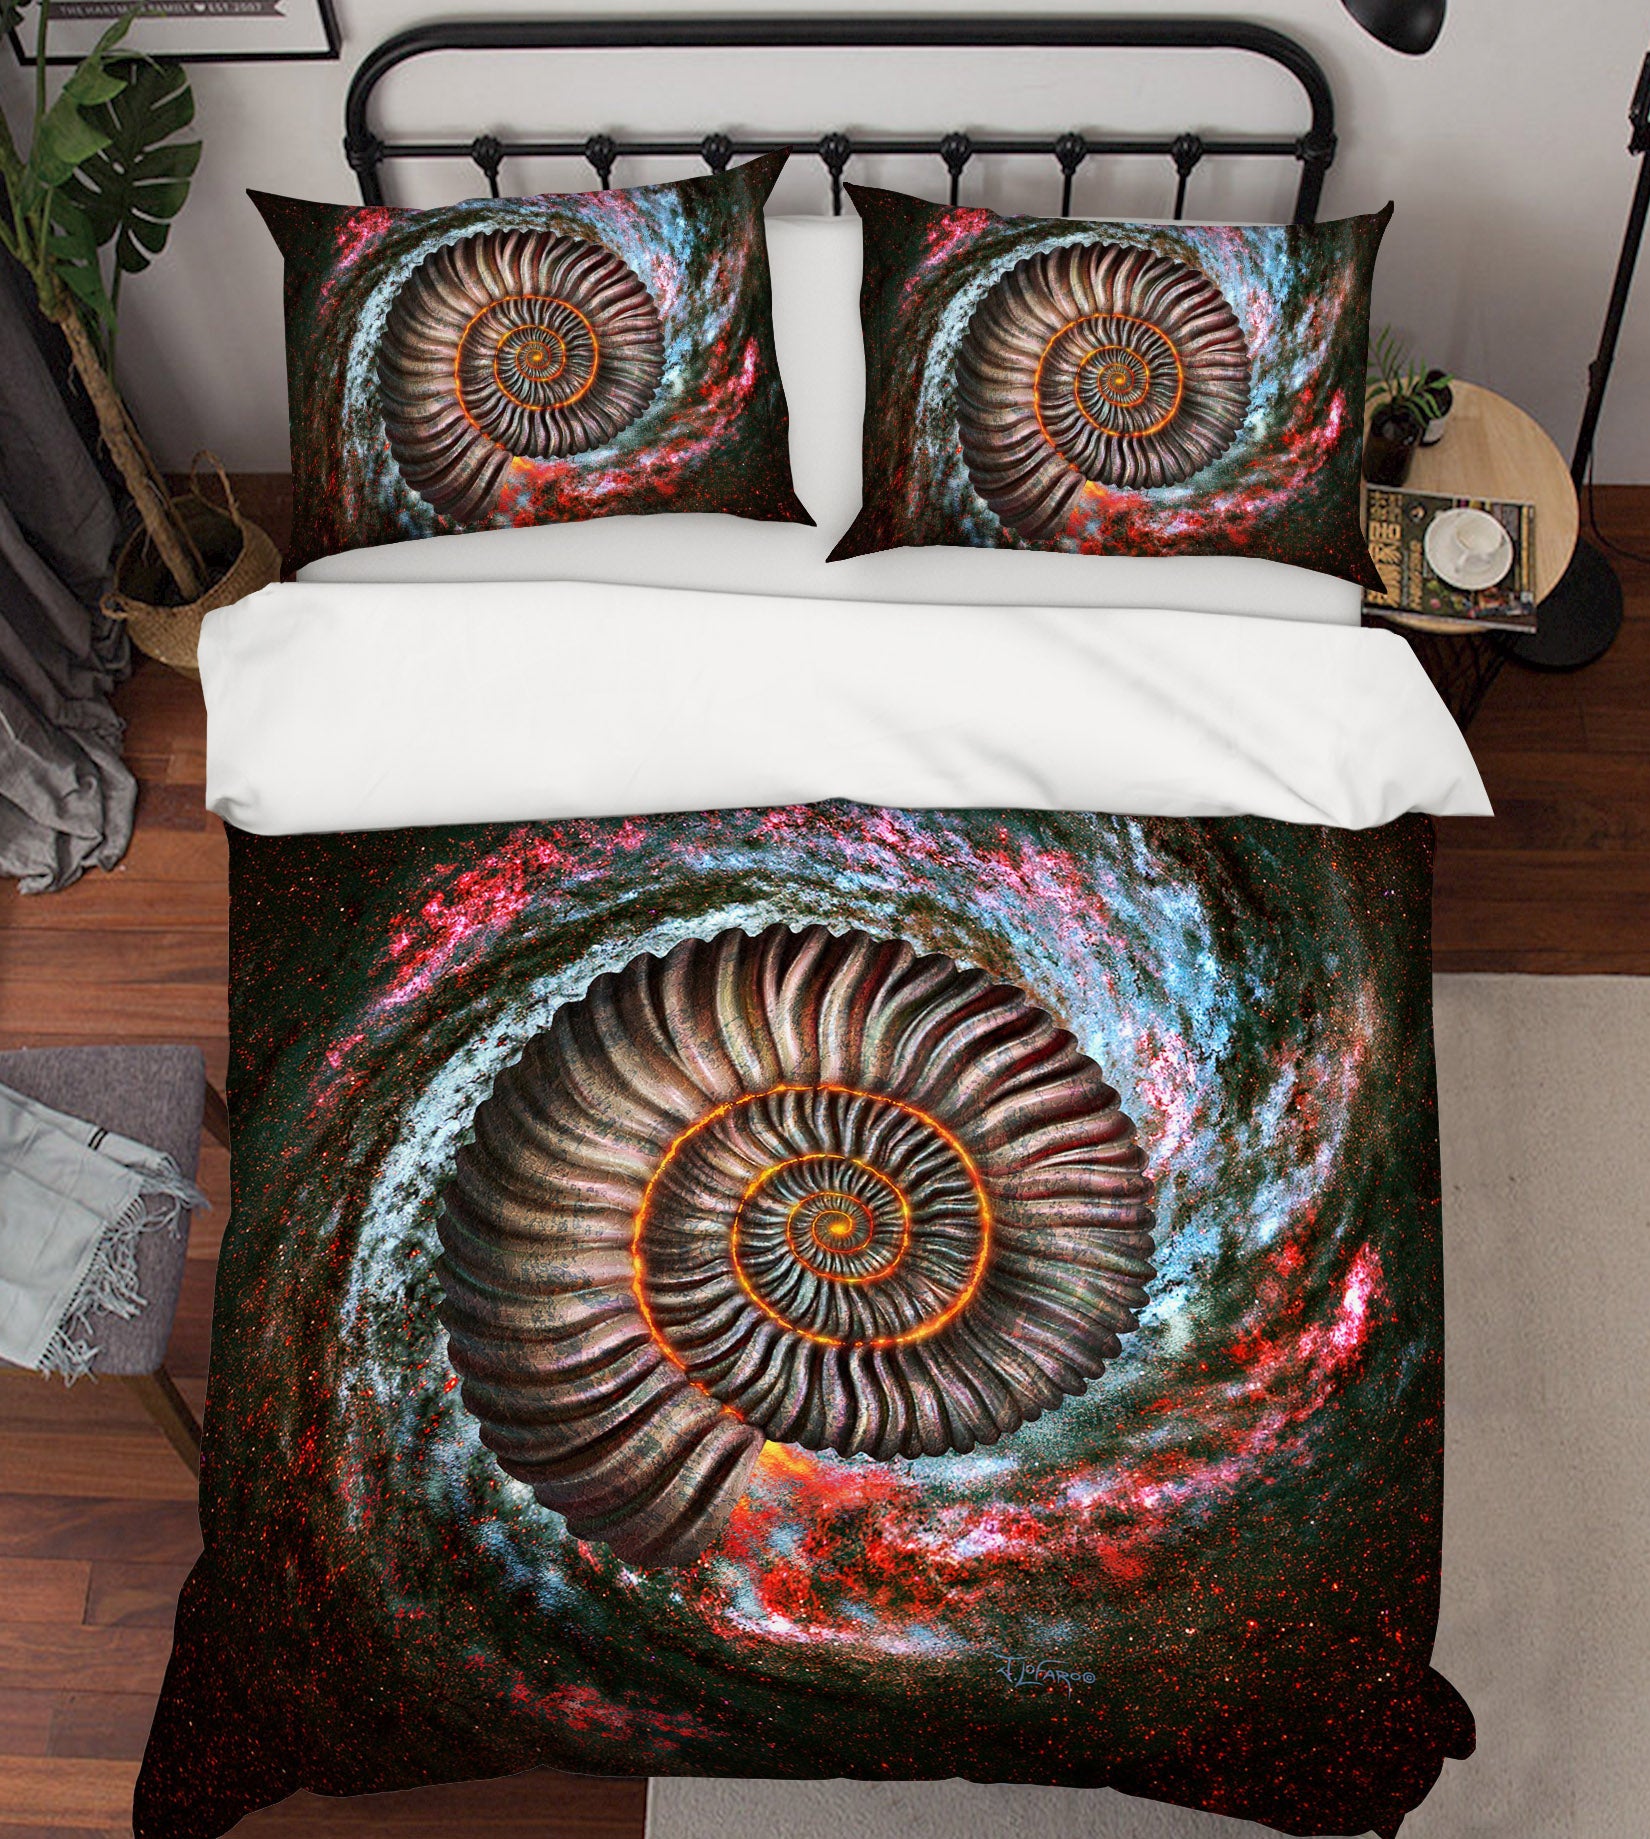 3D Starry Sky Vortex 18058 Jerry LoFaro bedding Bed Pillowcases Quilt